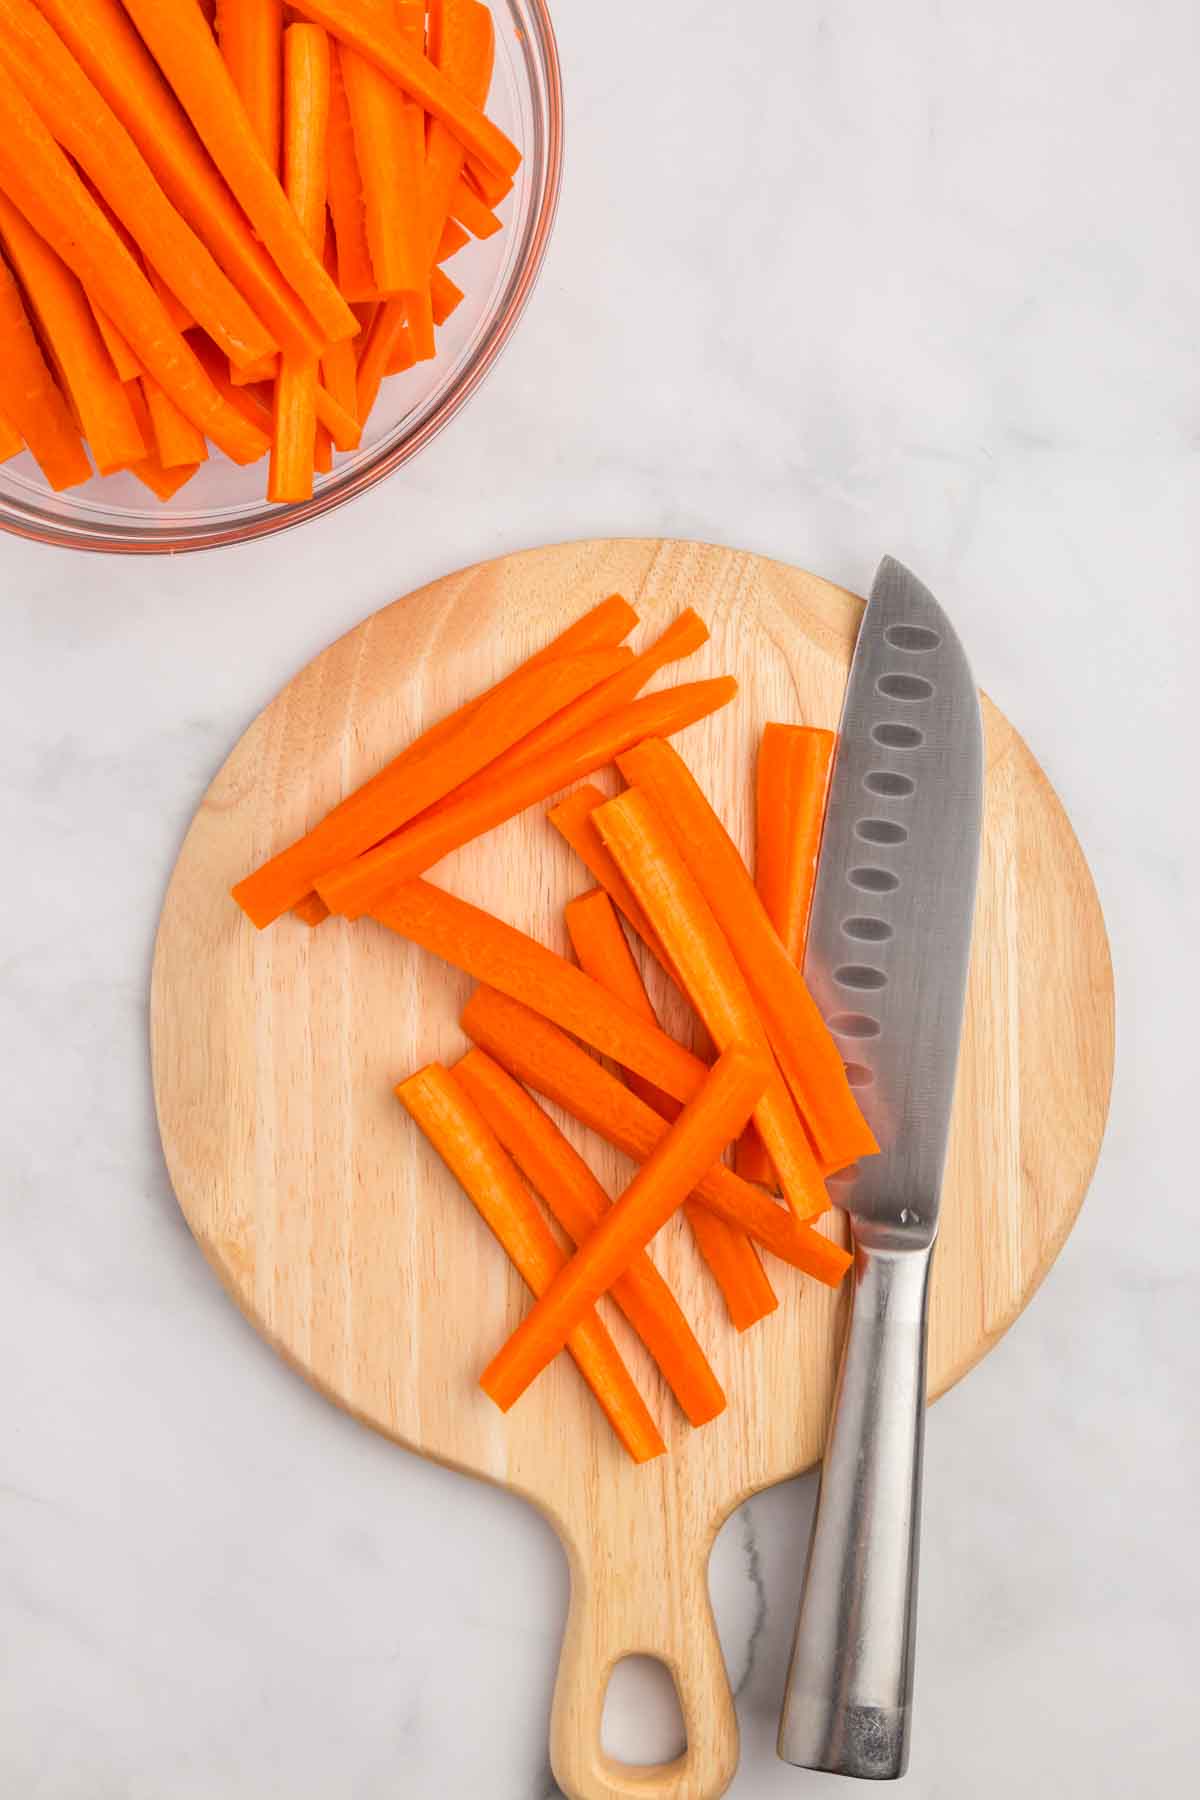 Cutting carrots into sticks. 